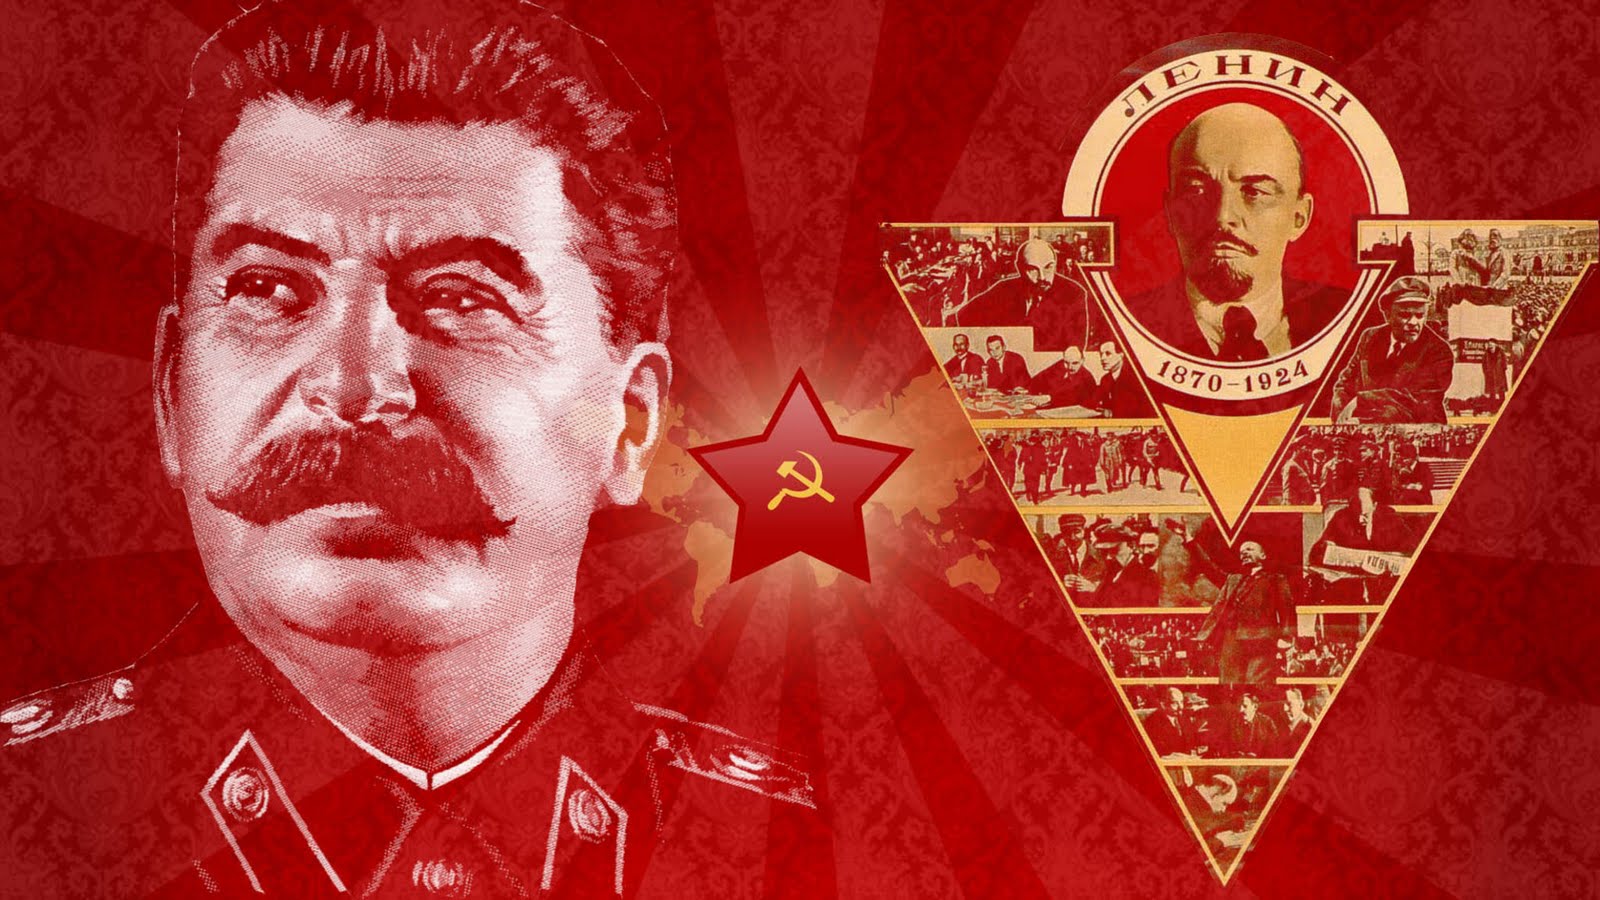 Joseph Stalin and Vladimir Lenin